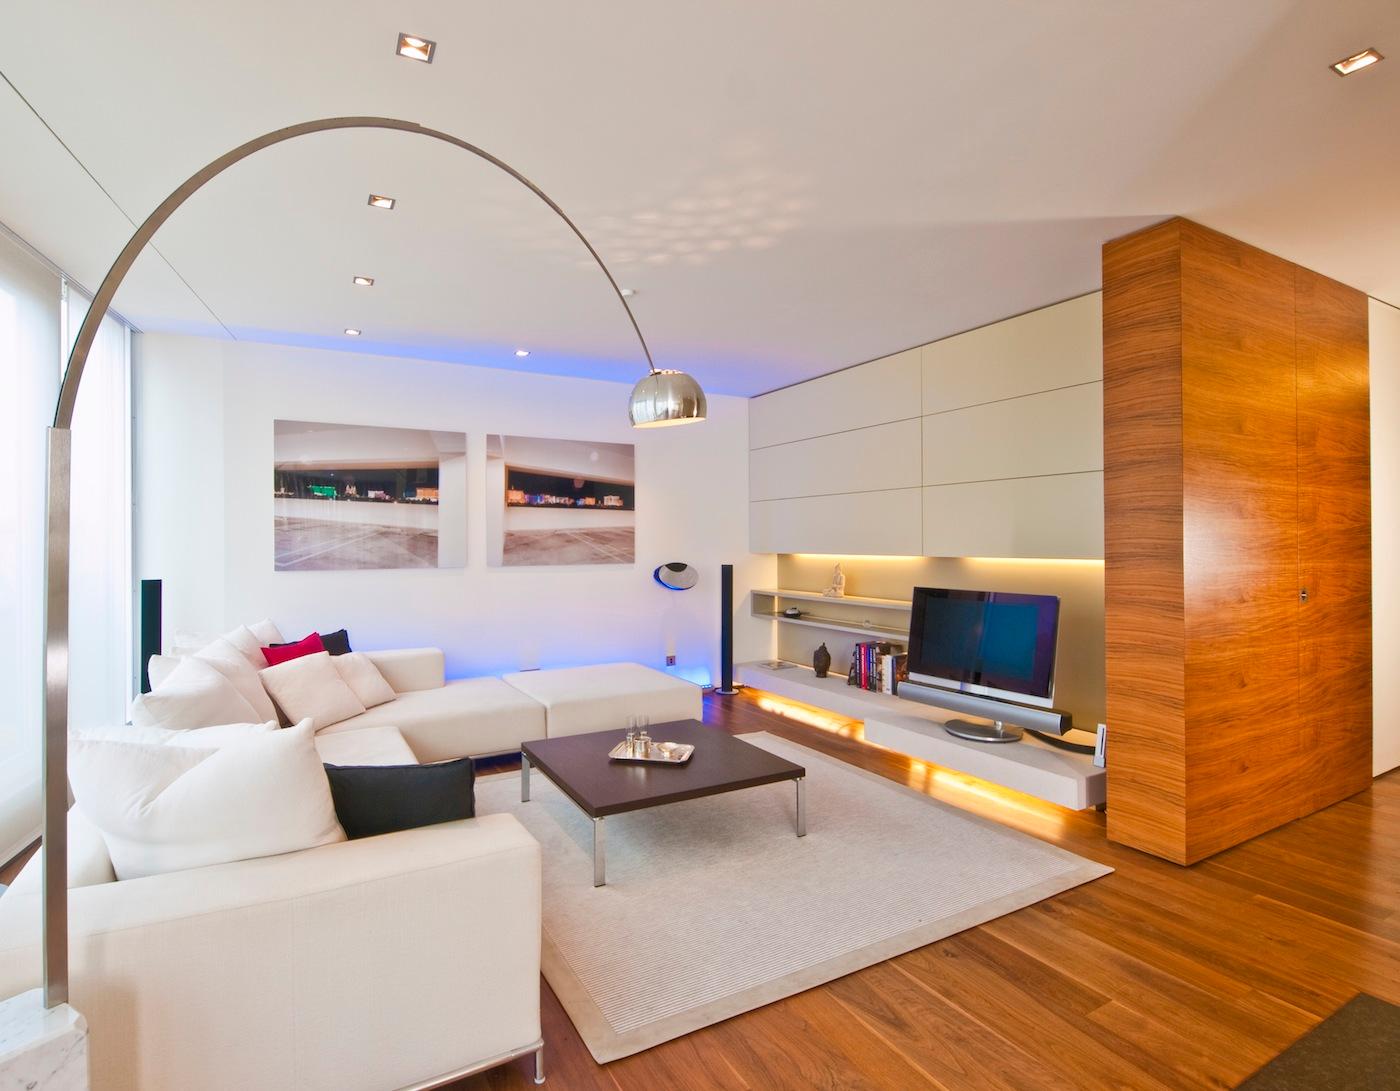 exclusives Wohnloft #couchtisch #loft #sofa #indirektebeleuchtung #wandbild #wohnwand #offenerwohnbereich #tvboard ©www.peters-fotodesign.com